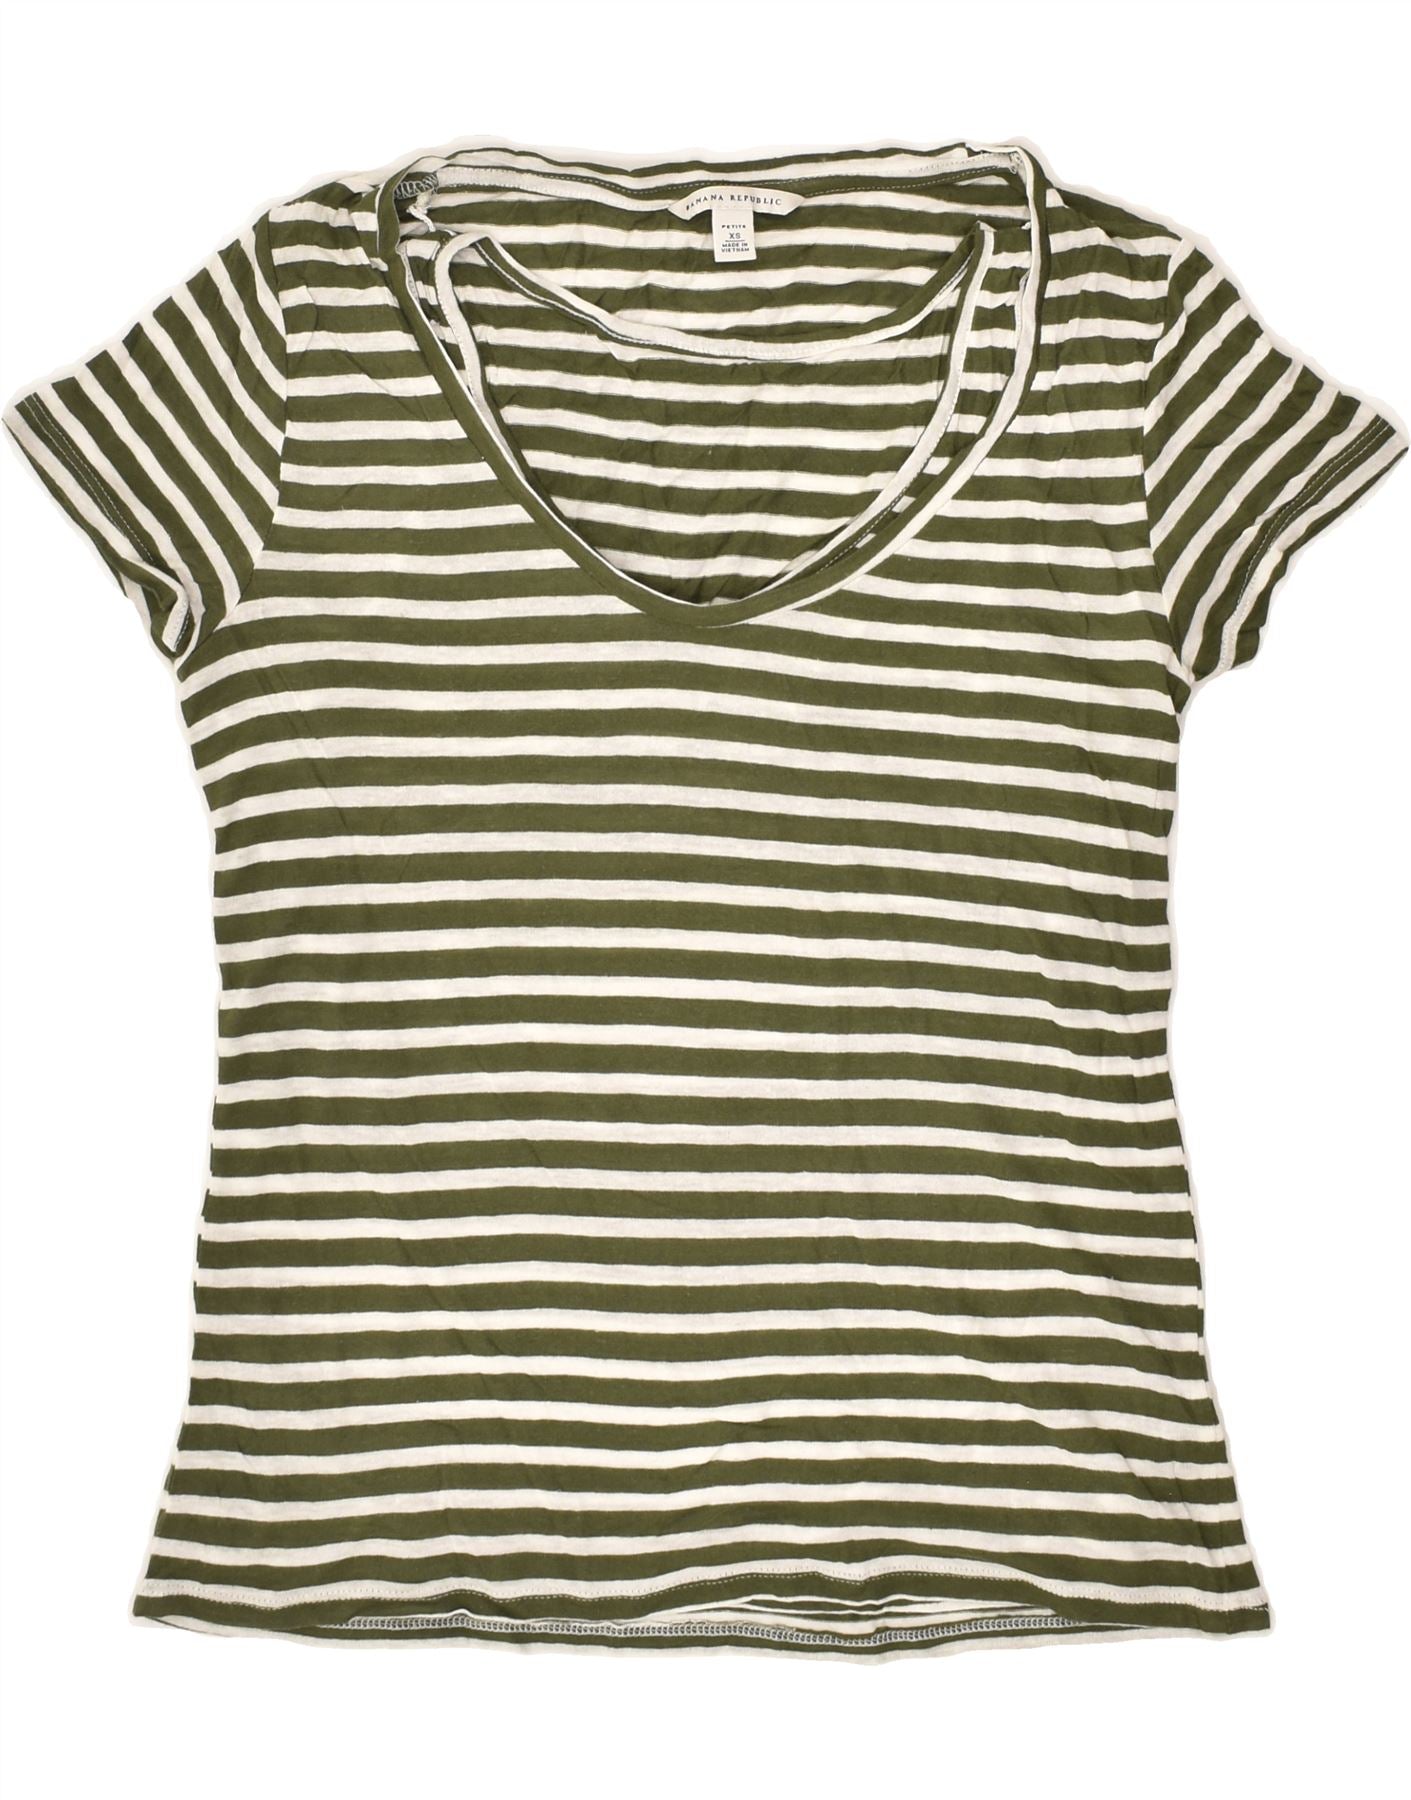 BANANA REPUBLIC Womens Petite T-Shirt Top UK 6 XS Green Striped Rayon, Vintage & Second-Hand Clothing Online